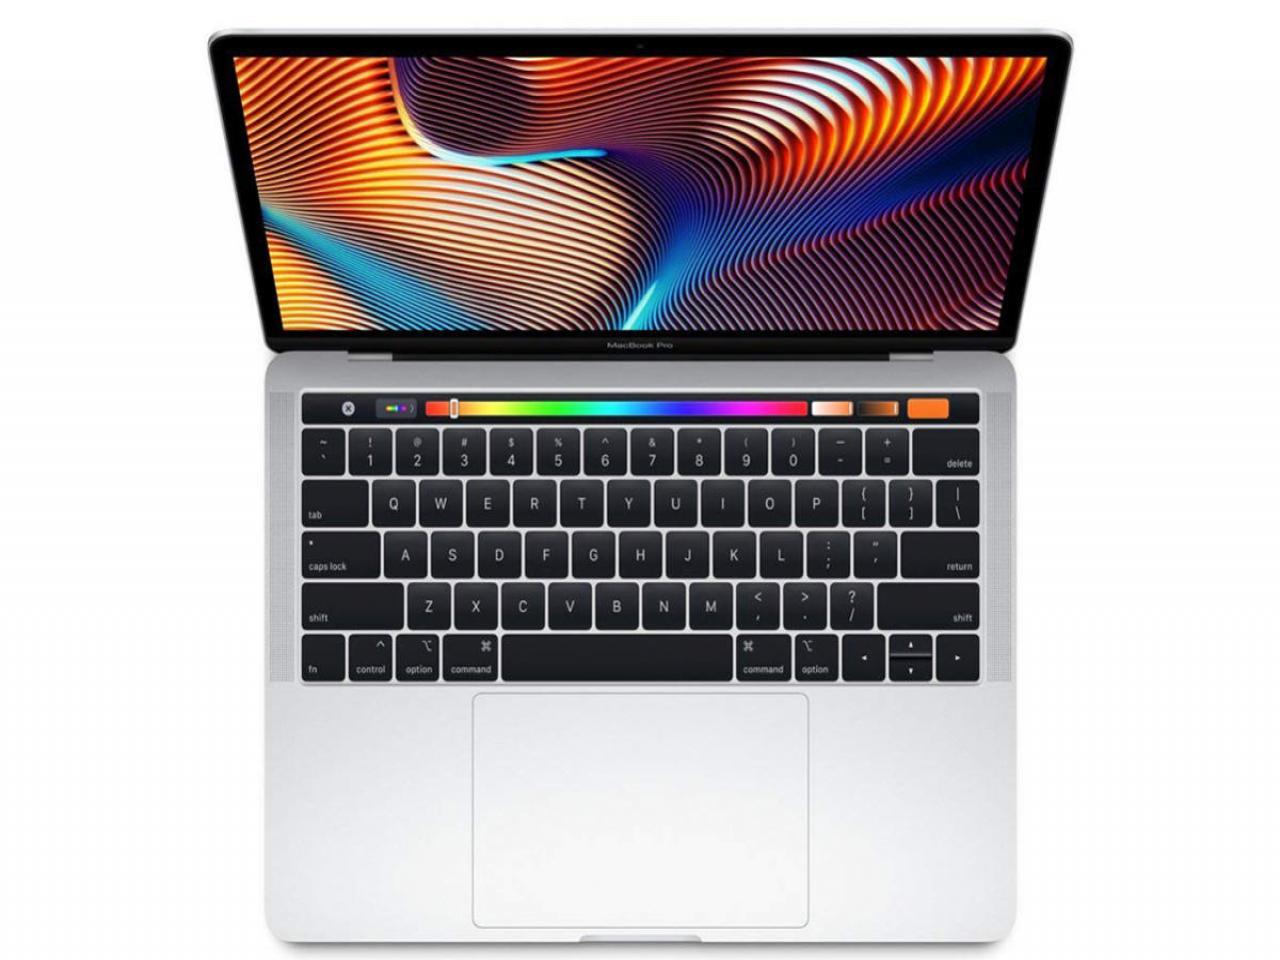 Apple MacBook Pro (13", 2018, Four Thunderbolt 3 ports) space gray